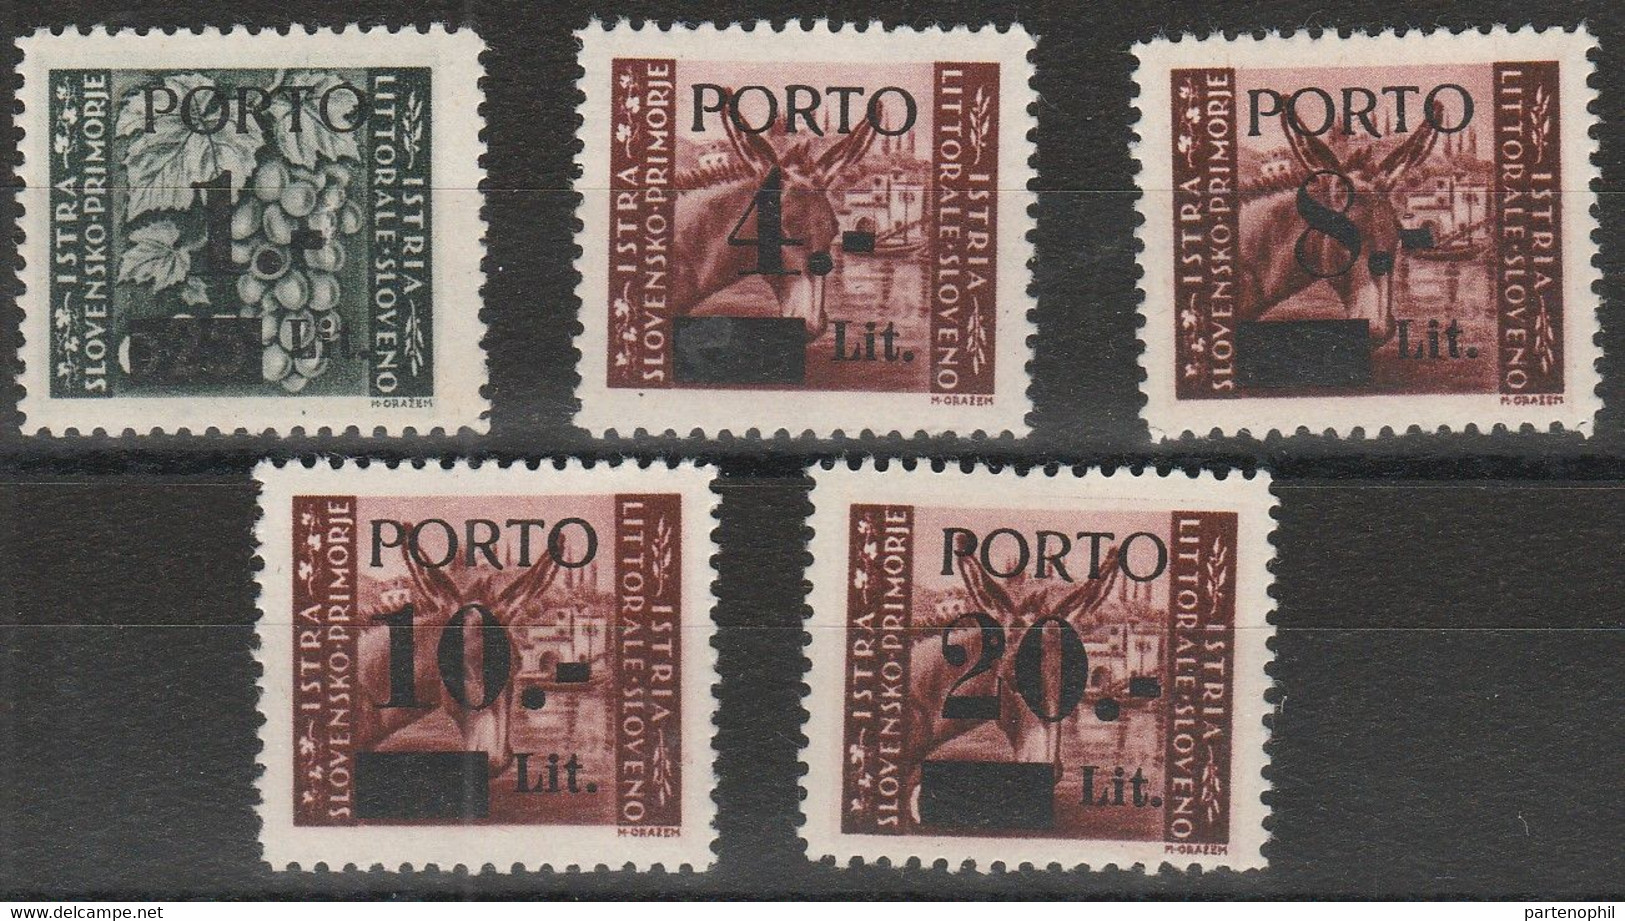 307 Istria E Litorale Sloveno  1946 - Francobolli, Soprastampati “PORTO” N. 8/13. Cat. € 250,00. SPL.MNH - Yugoslavian Occ.: Slovenian Shore